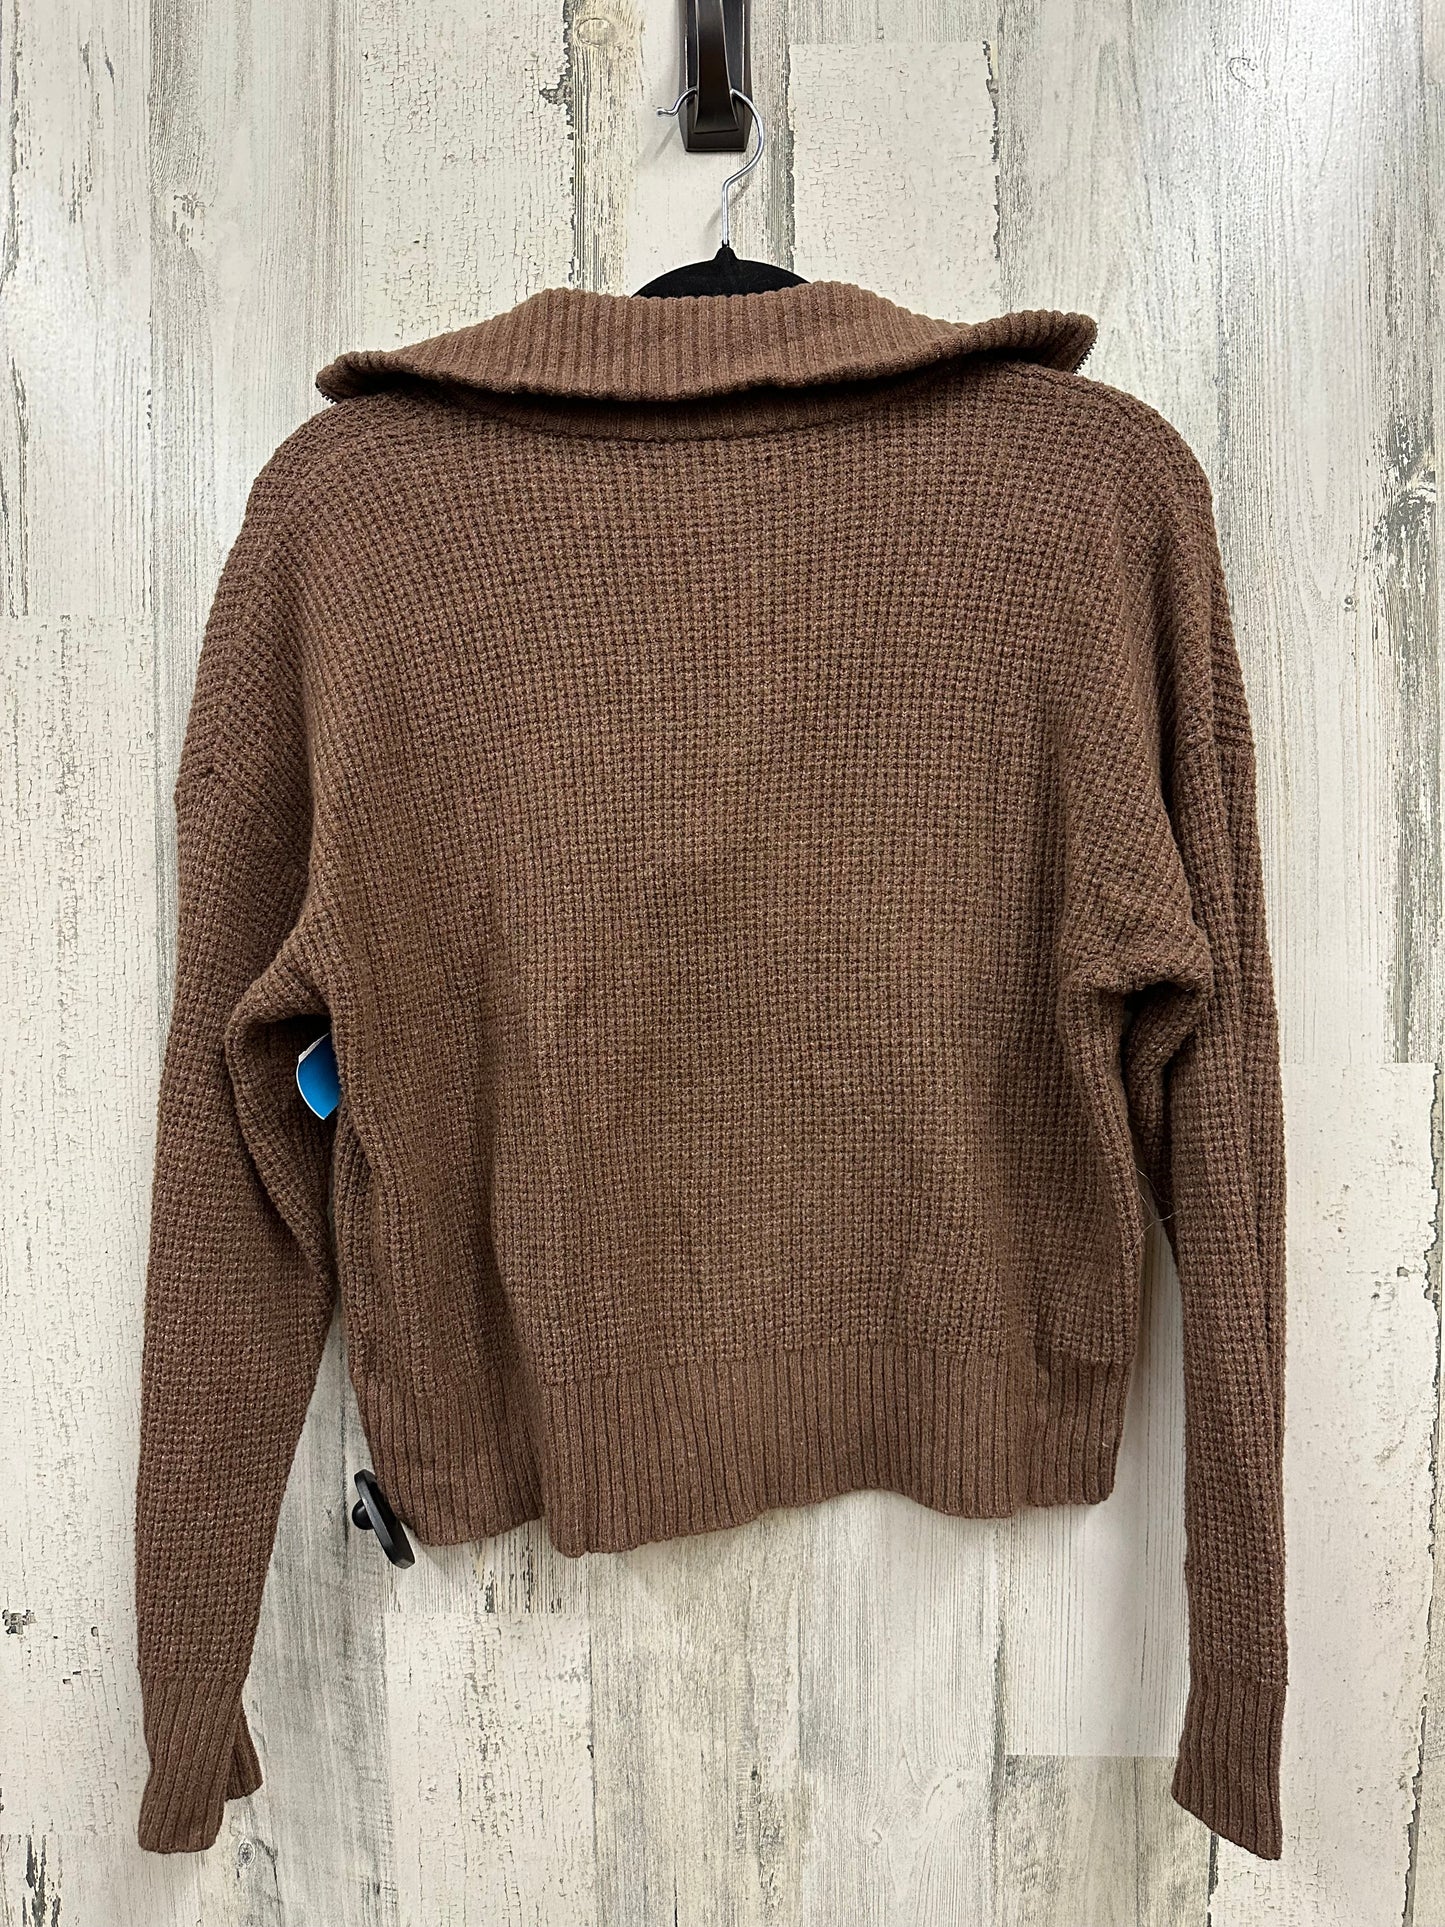 Sweater By William Rast  Size: M